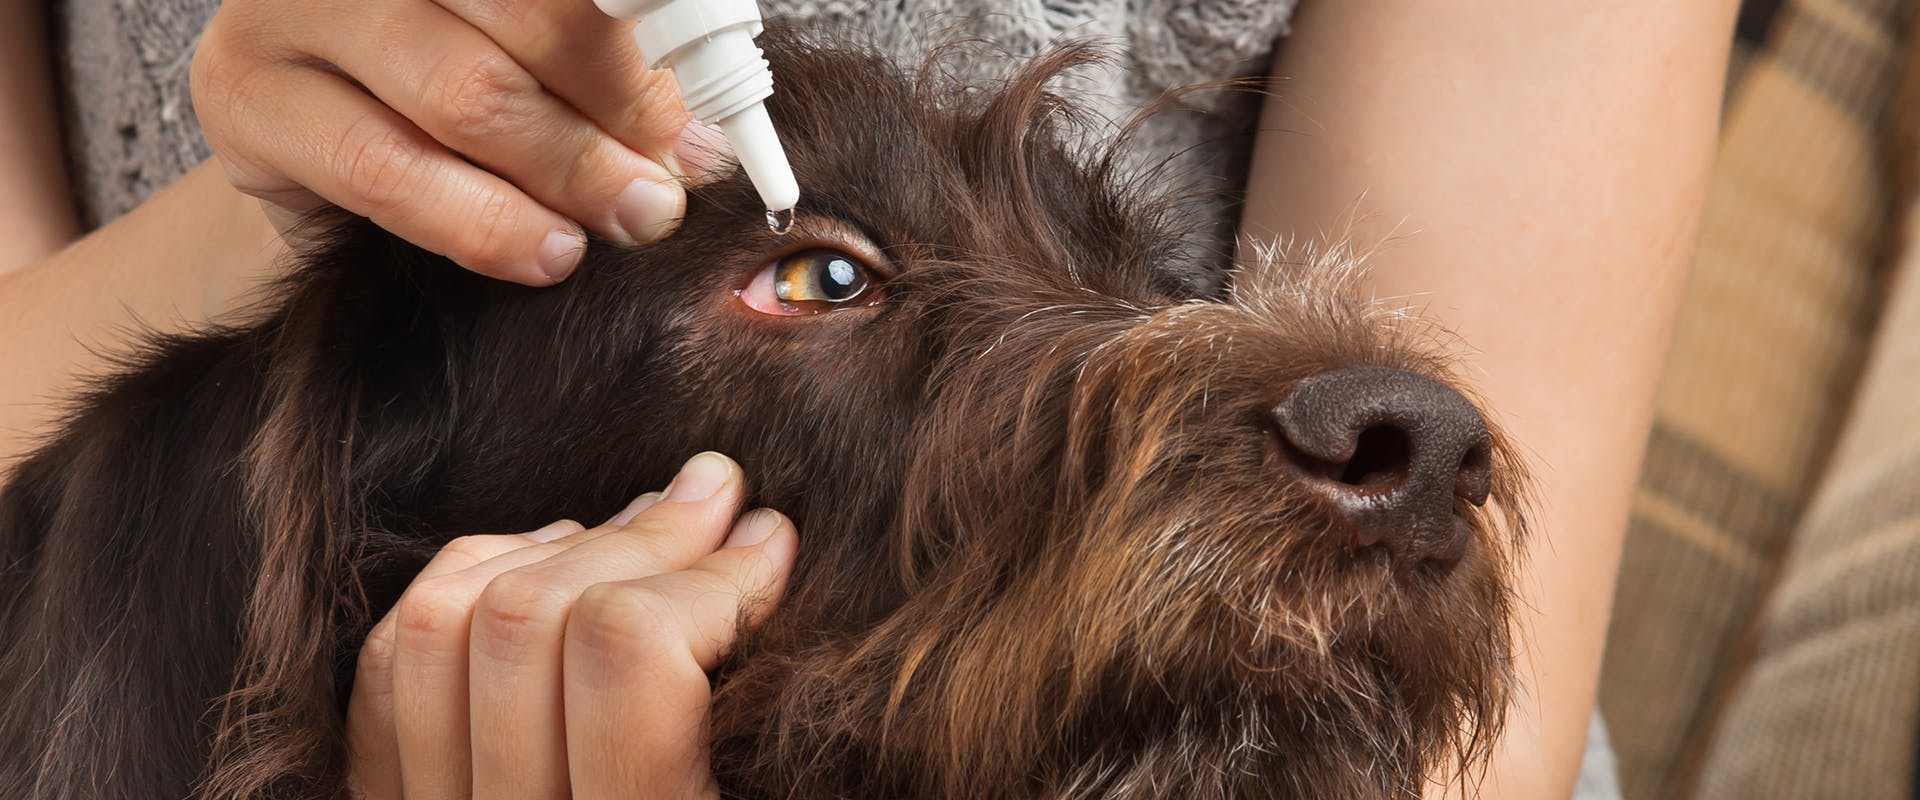 A dog having eye drops administered